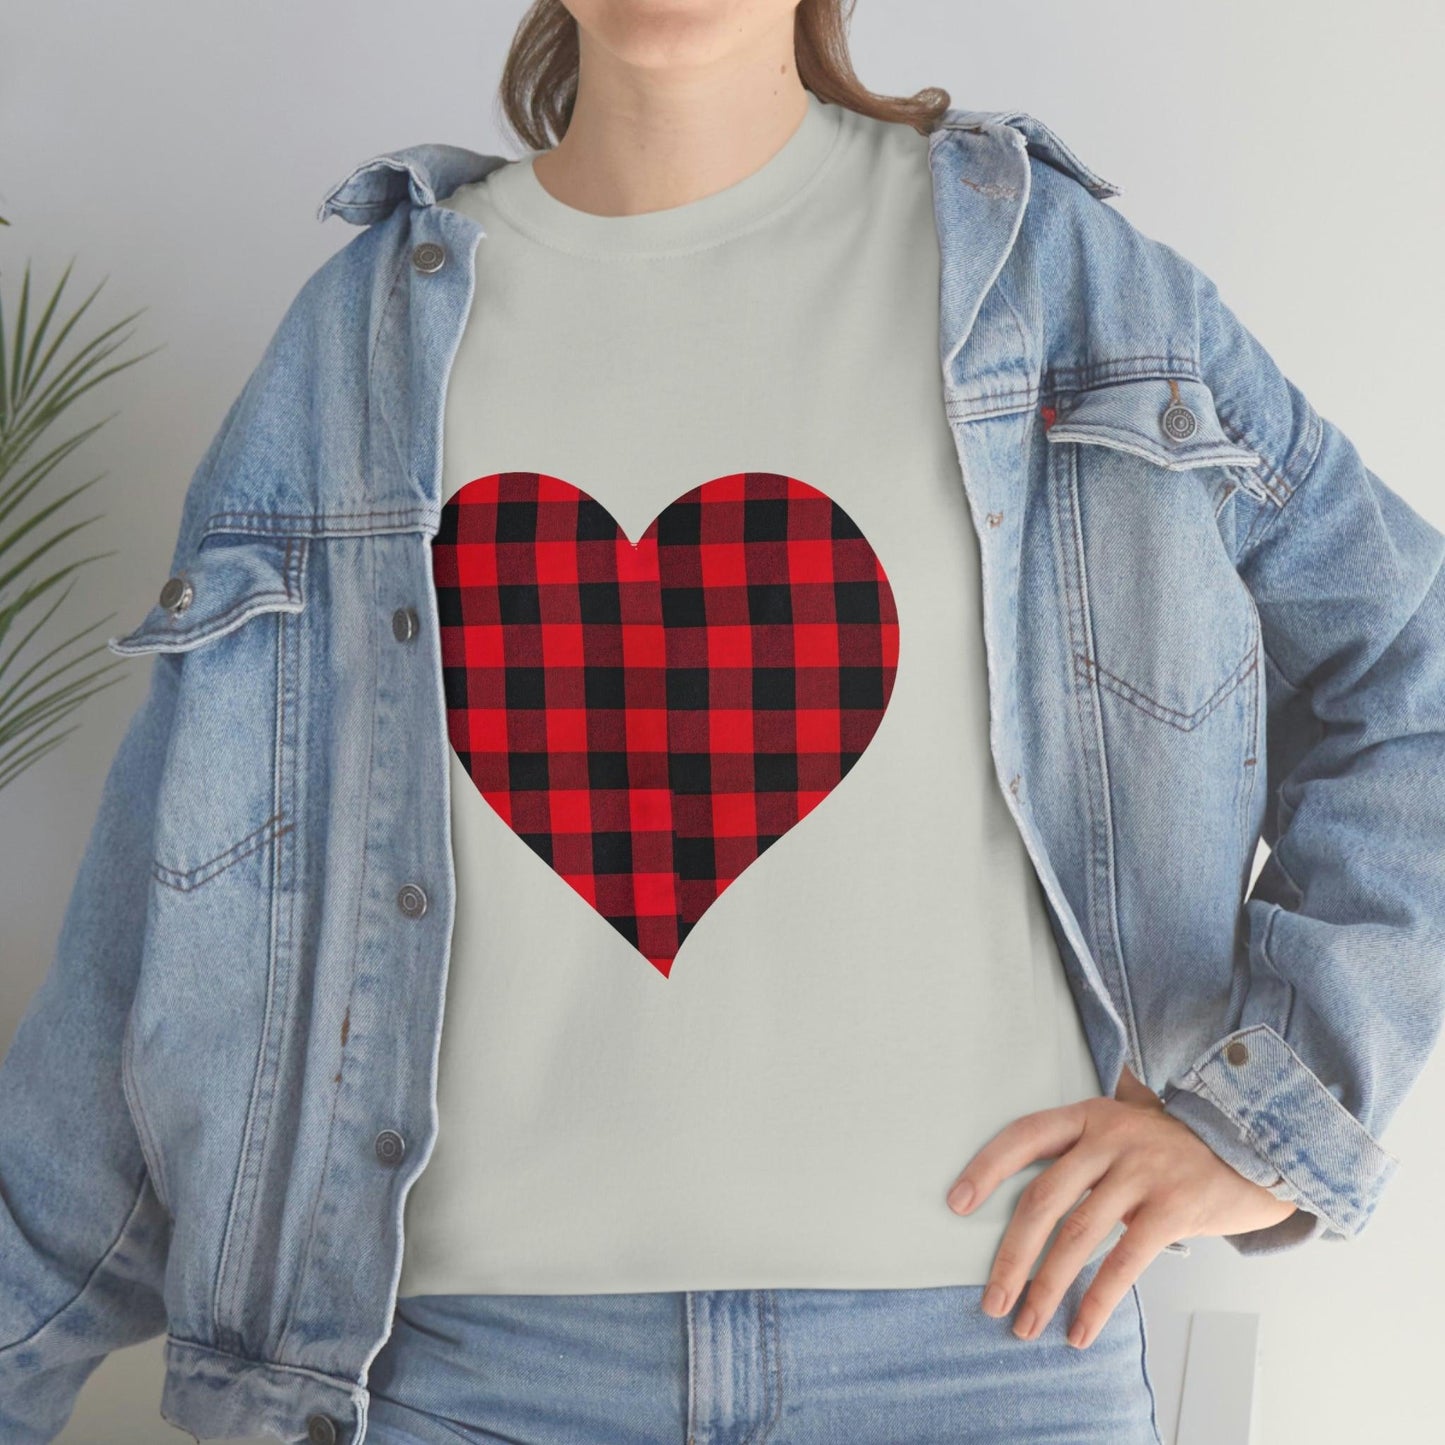 Plaid Heart T-Shirt, Valentines day Shirt,